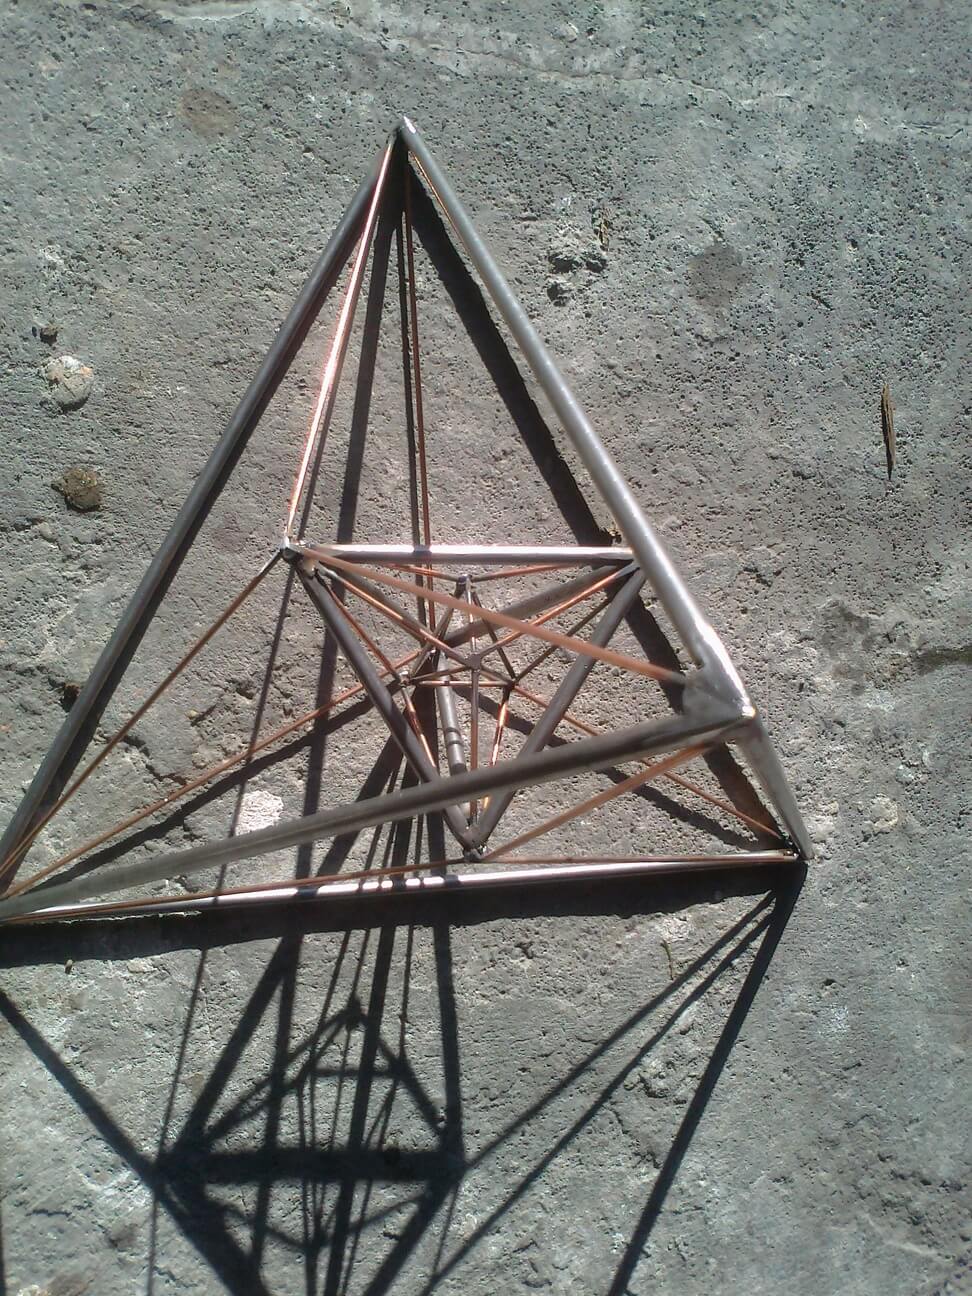 Abstract metallic triangular shape